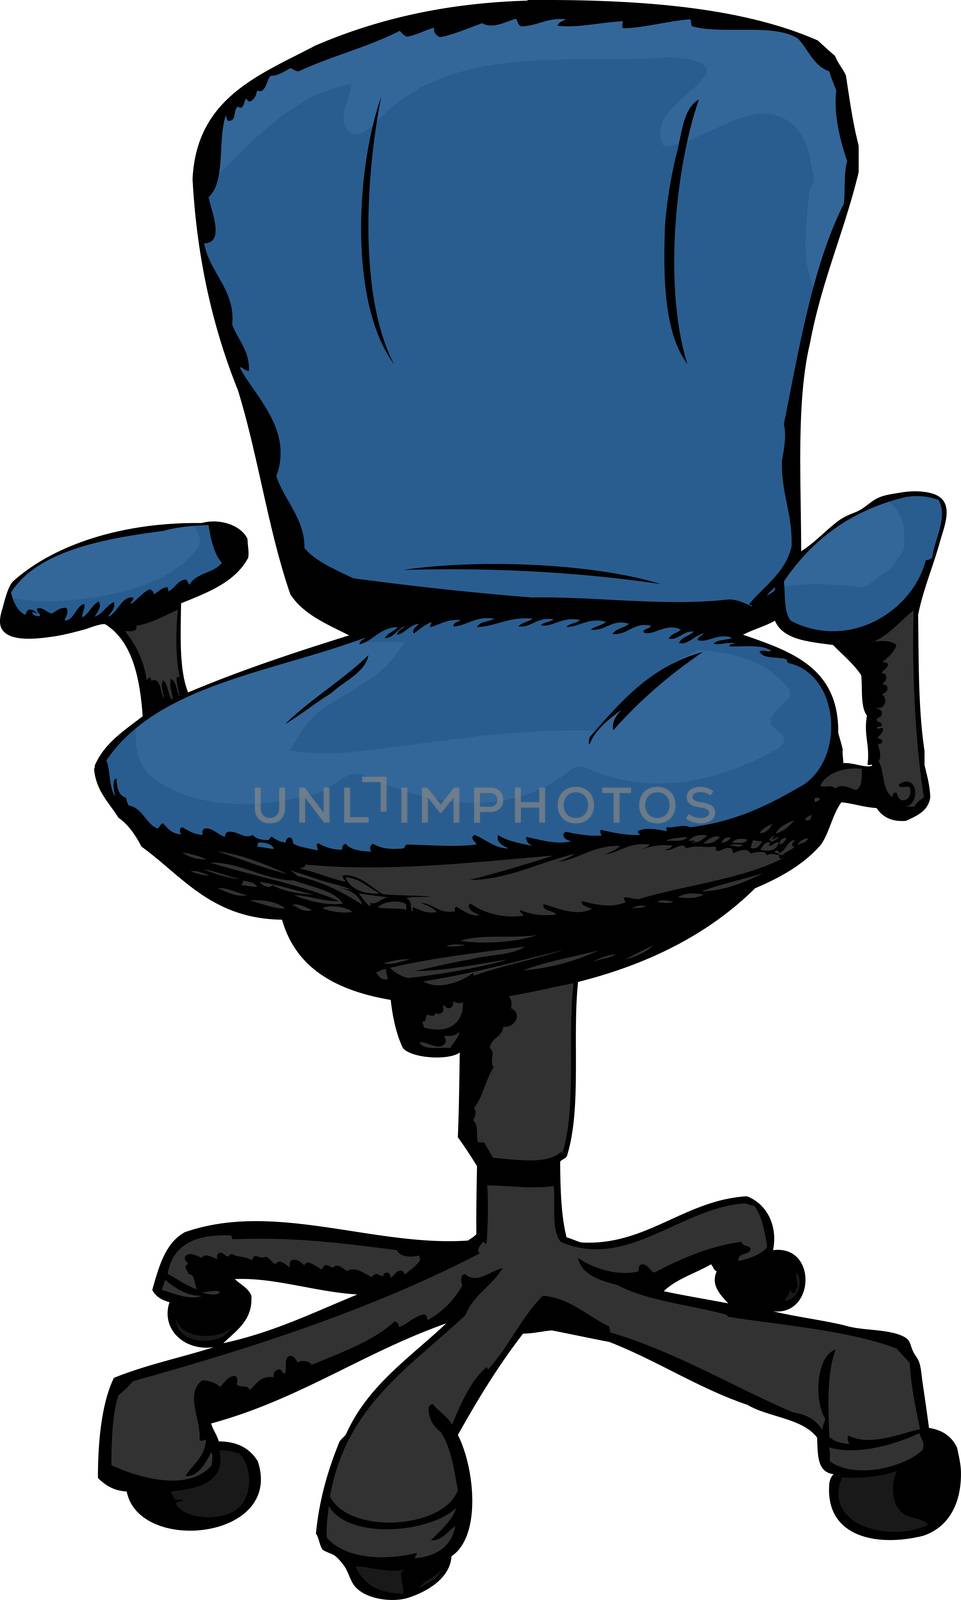 Blue ergonomic office task chair over white background